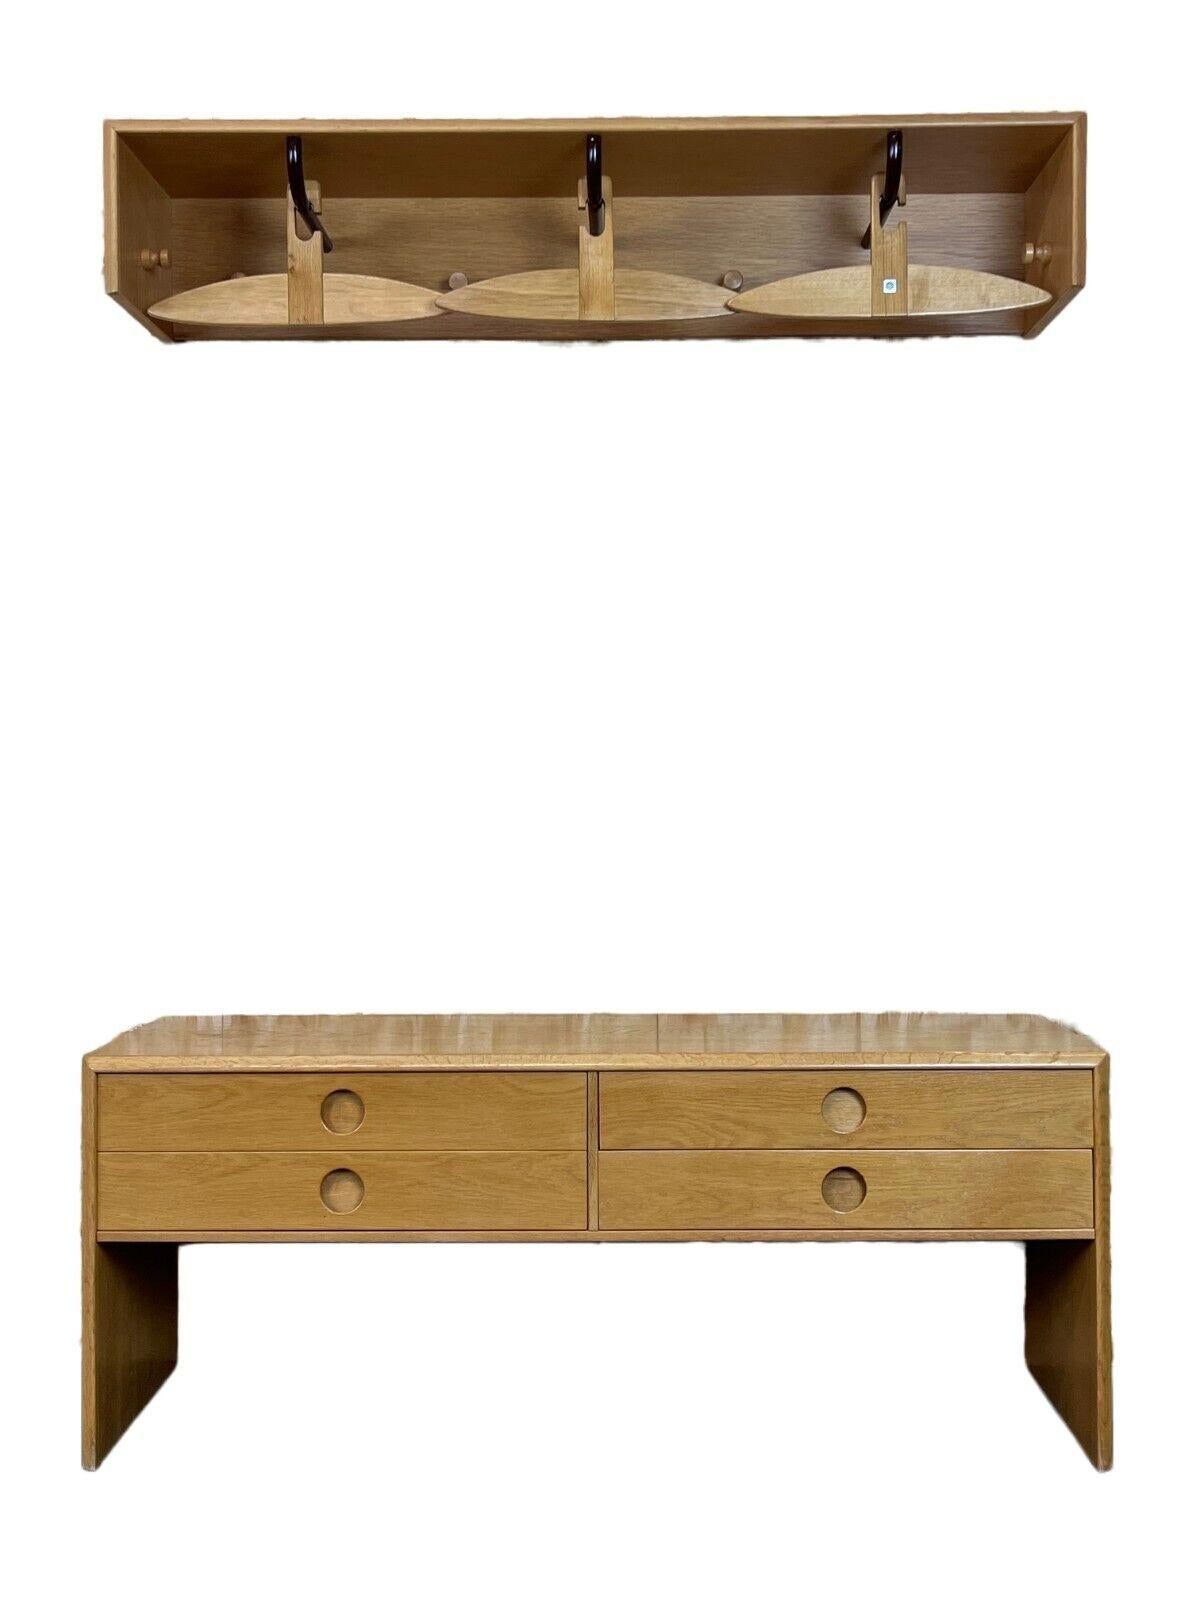 60s 70s wardrobe sideboard cabinet oak VM Vildbjerg Danish Design

Object: sideboard + wardrobe

Manufacturer: VM Vildbjerg

Condition: good - vintage

Age: around 1960-1970

Dimensions:

Width = 124.5cm
Depth = 38cm
Height =